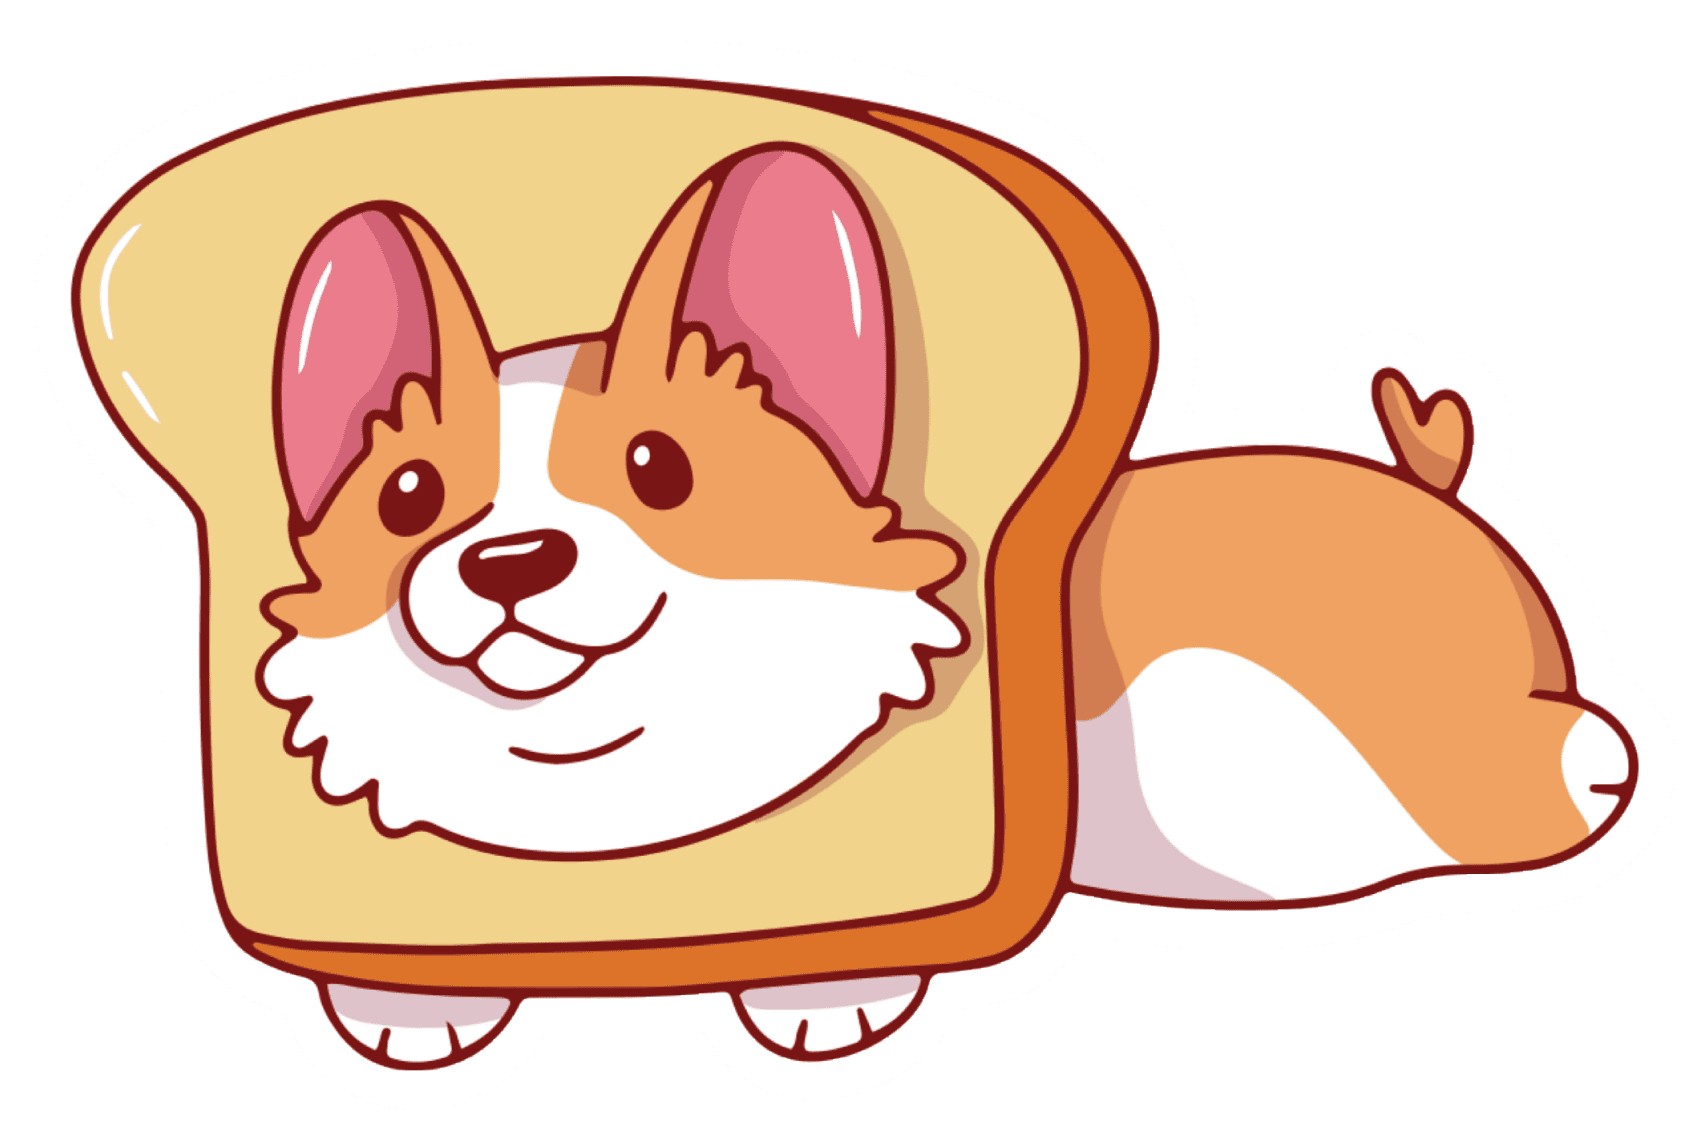 Corgi toast character sticker clipart photo